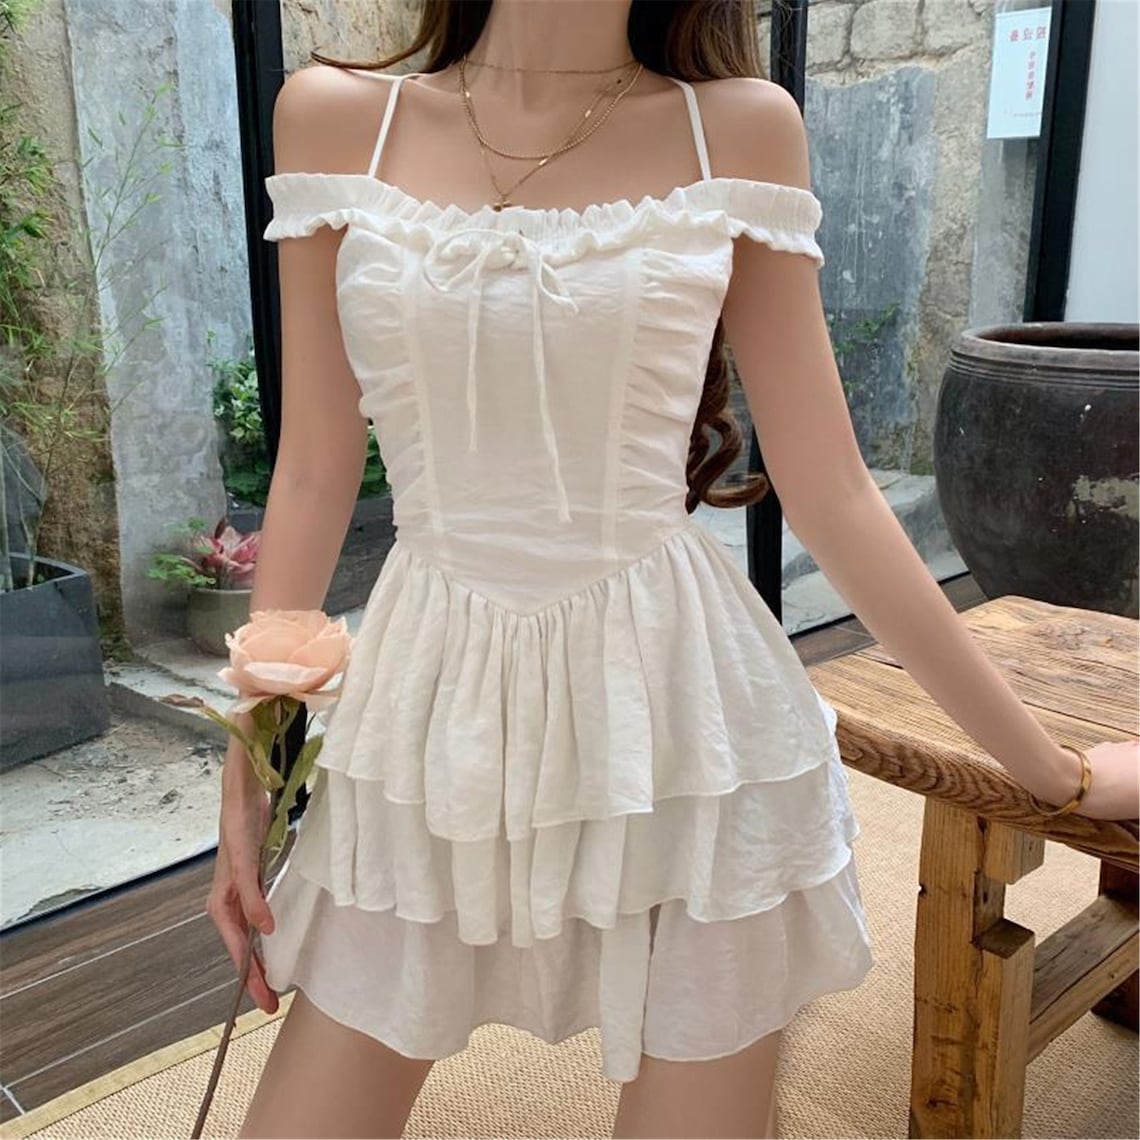 White Dress Mini Dress Milkmaid Dress Cottagecore Dress | Etsy